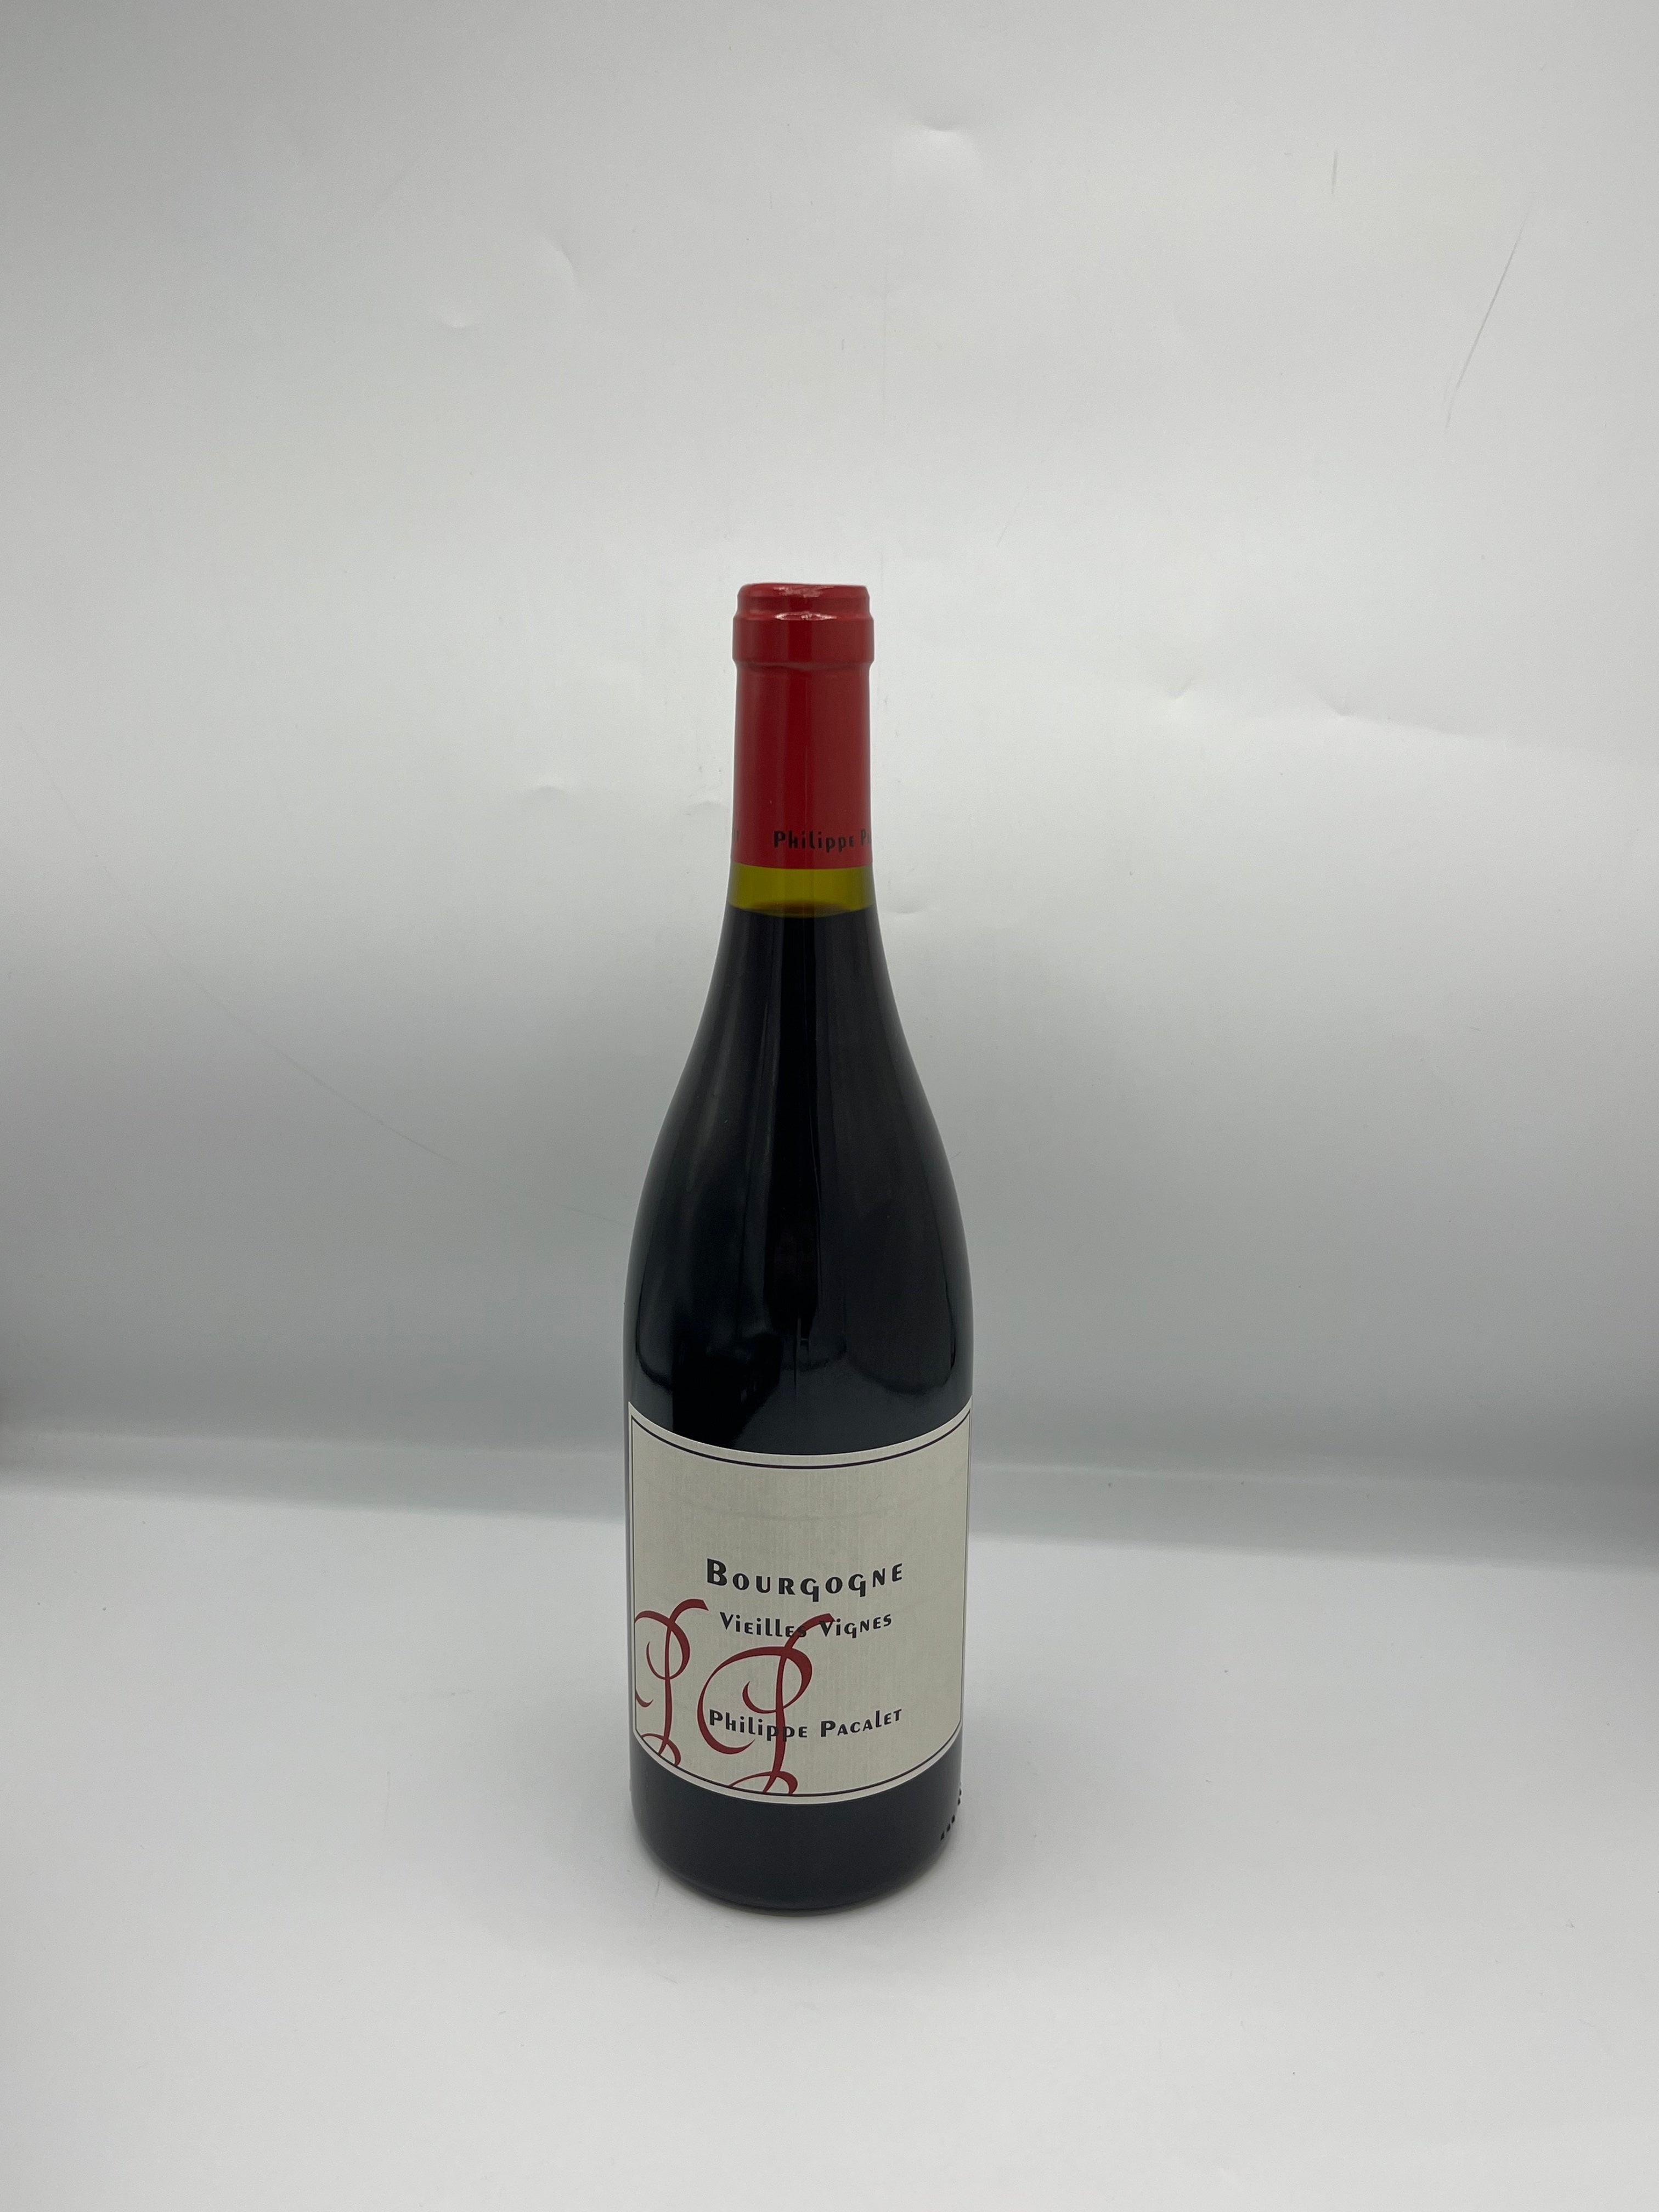 Burgundy “Vieilles Vignes” 2020 Red - Philippe Pacalet